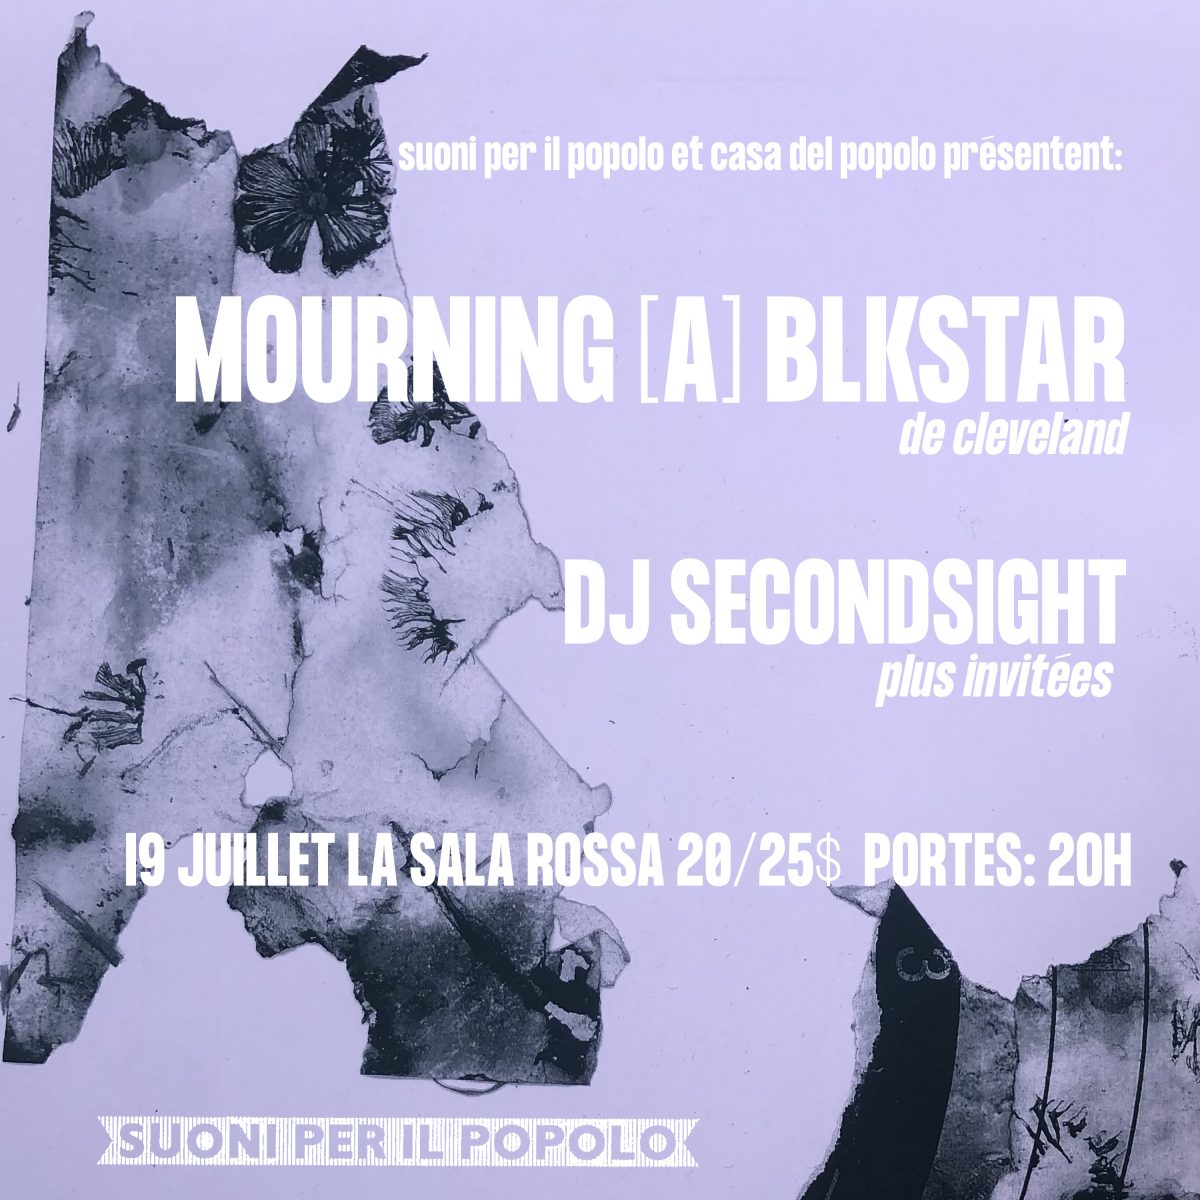 Mourning [A] BLKstar + DJ SECONDSIGHT + guests